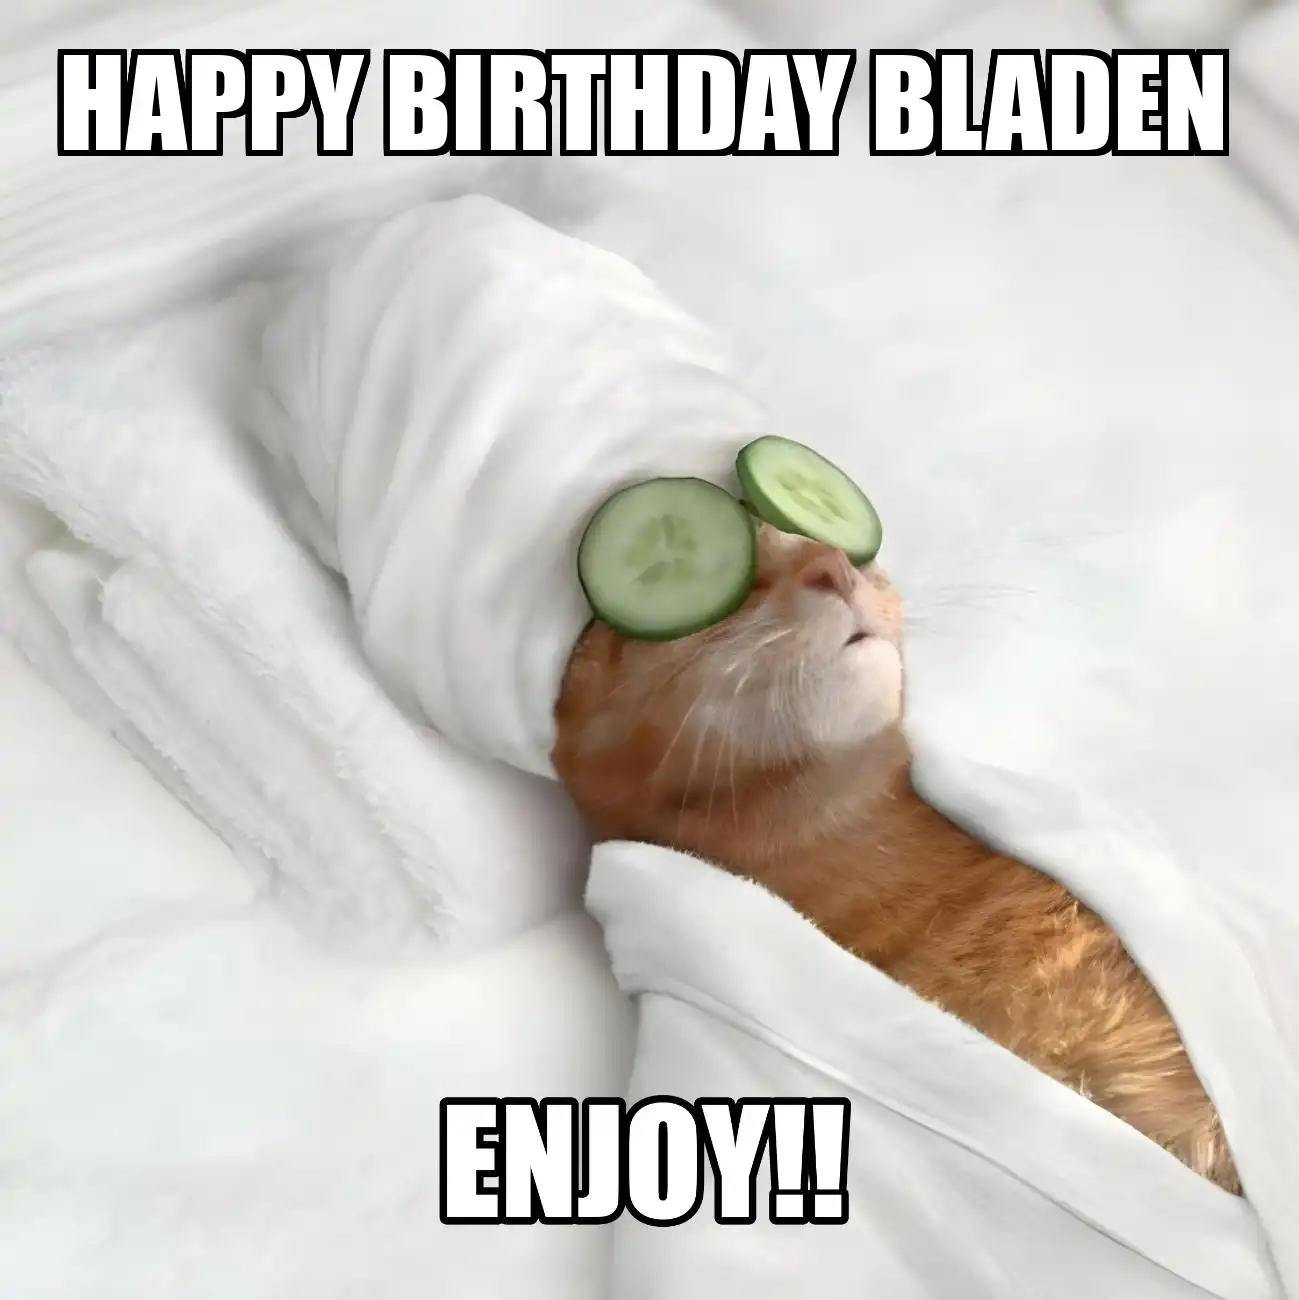 Happy Birthday Bladen Enjoy Cat Meme